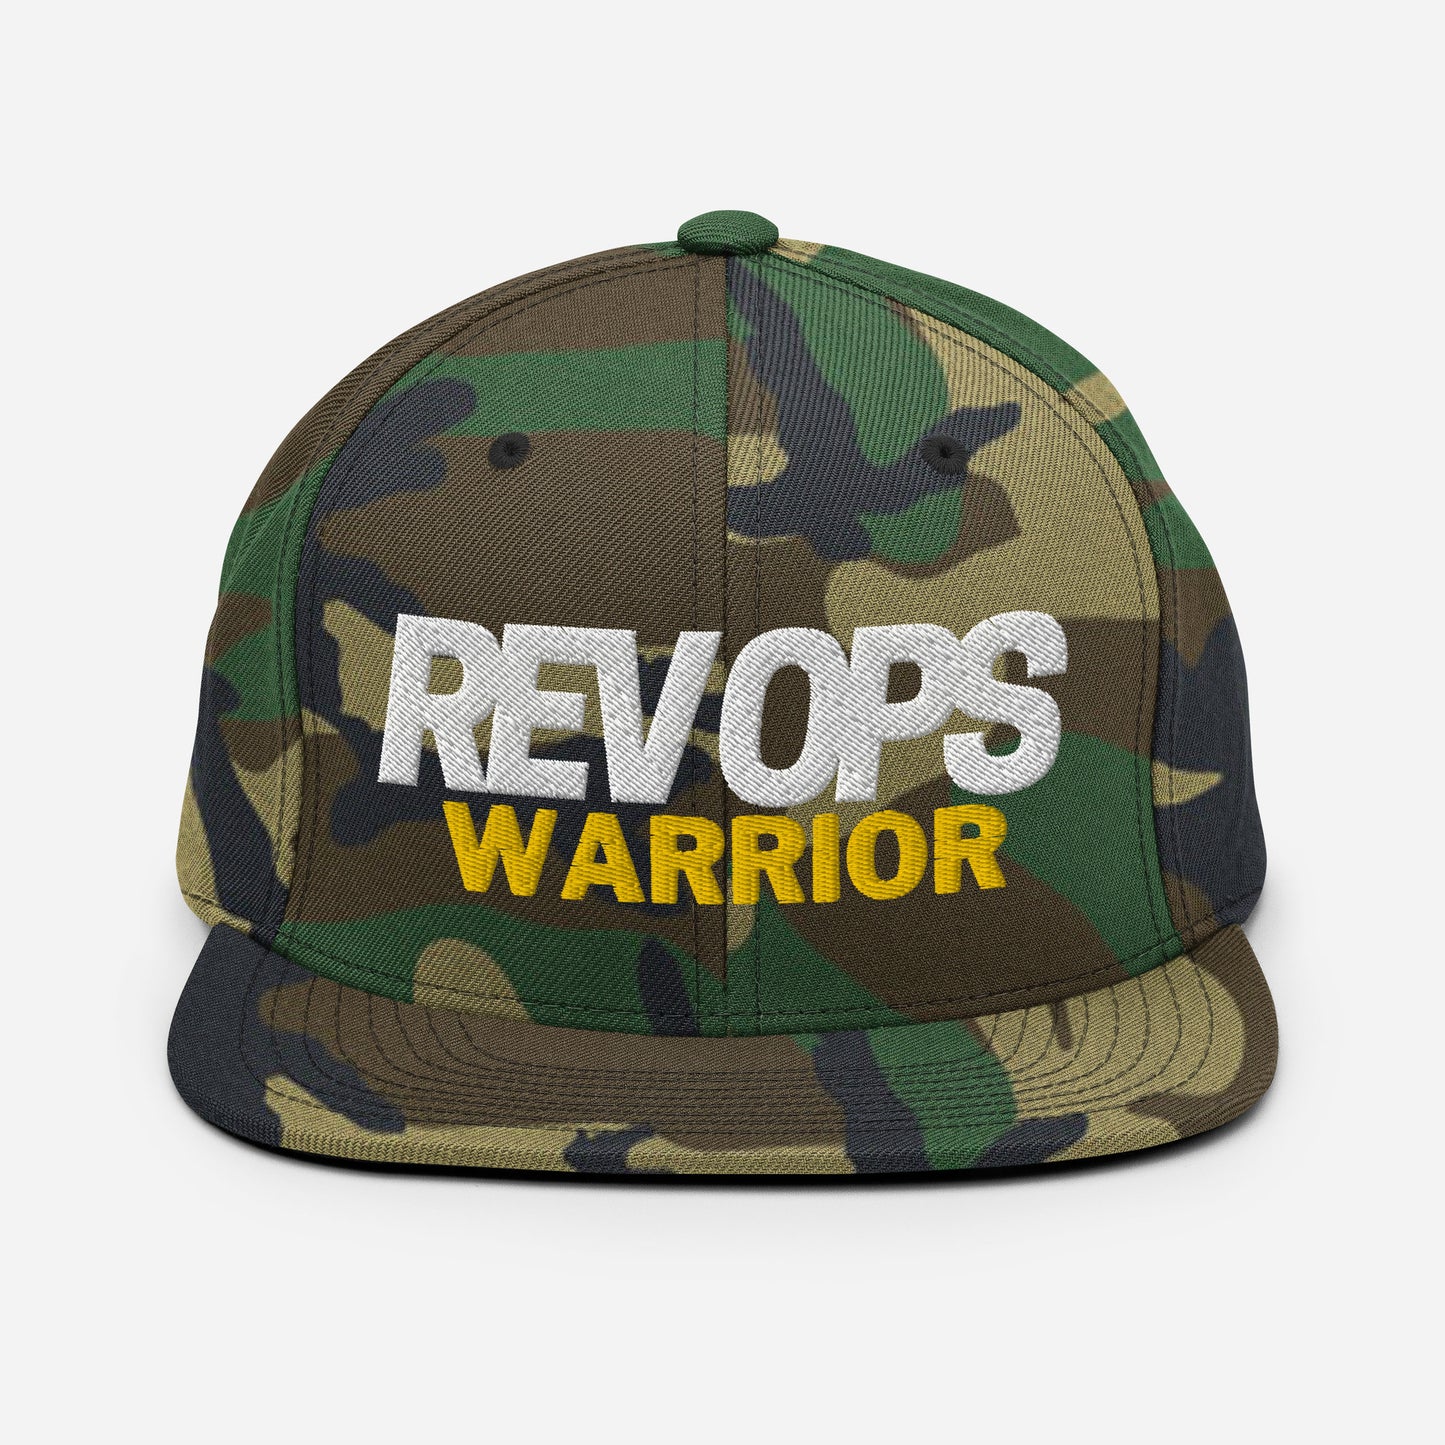 Rev Ops Warrior Snapback Hat